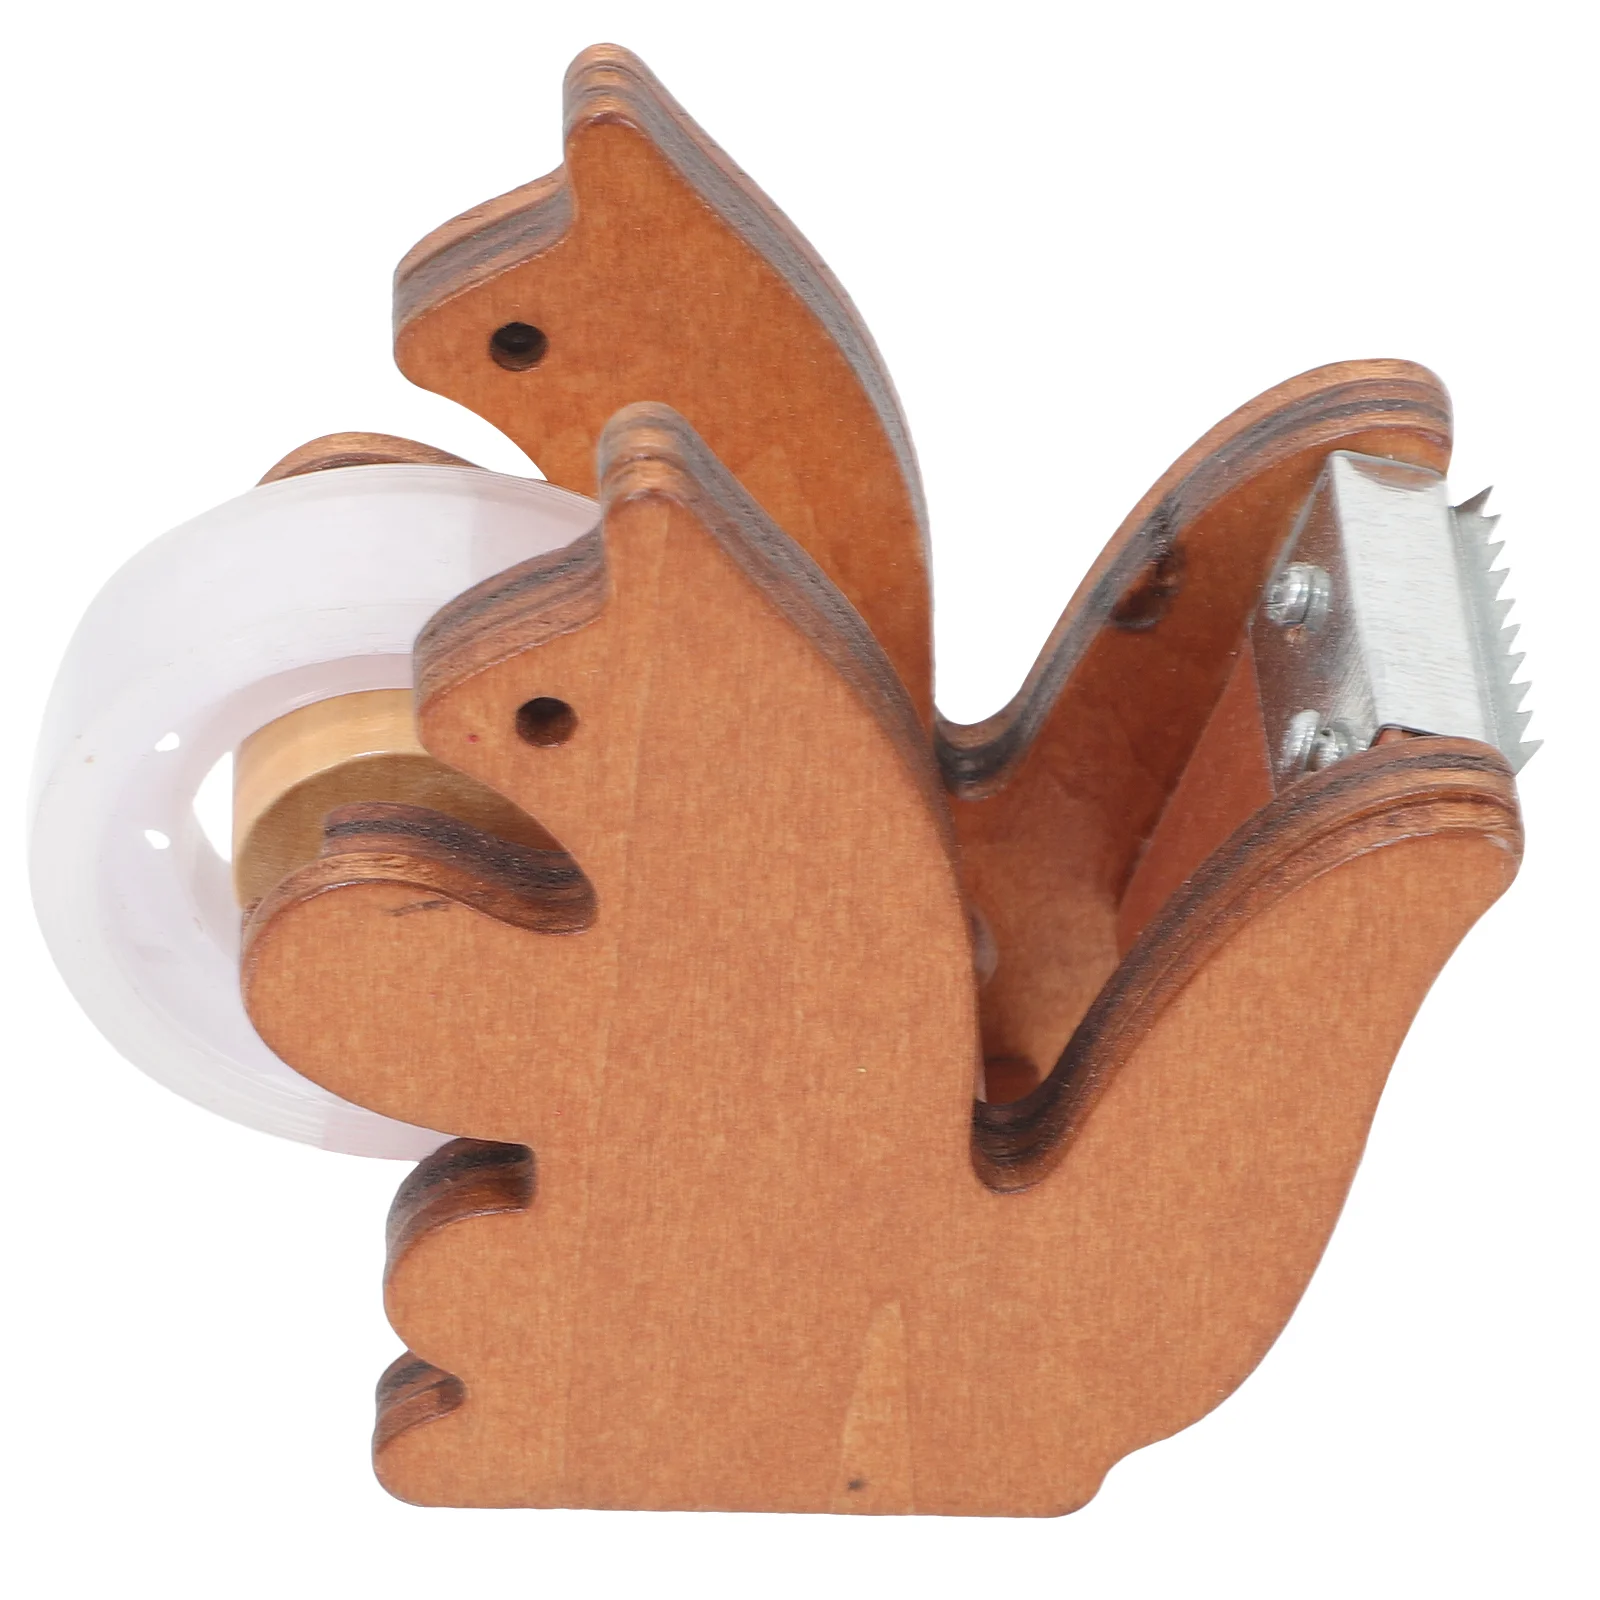 

Desktop Tape Squirrel Tape Holder Wooden Tape Holder Small Tape Office Tape Dispenser Squirrel Tape Dispenser School Supplies